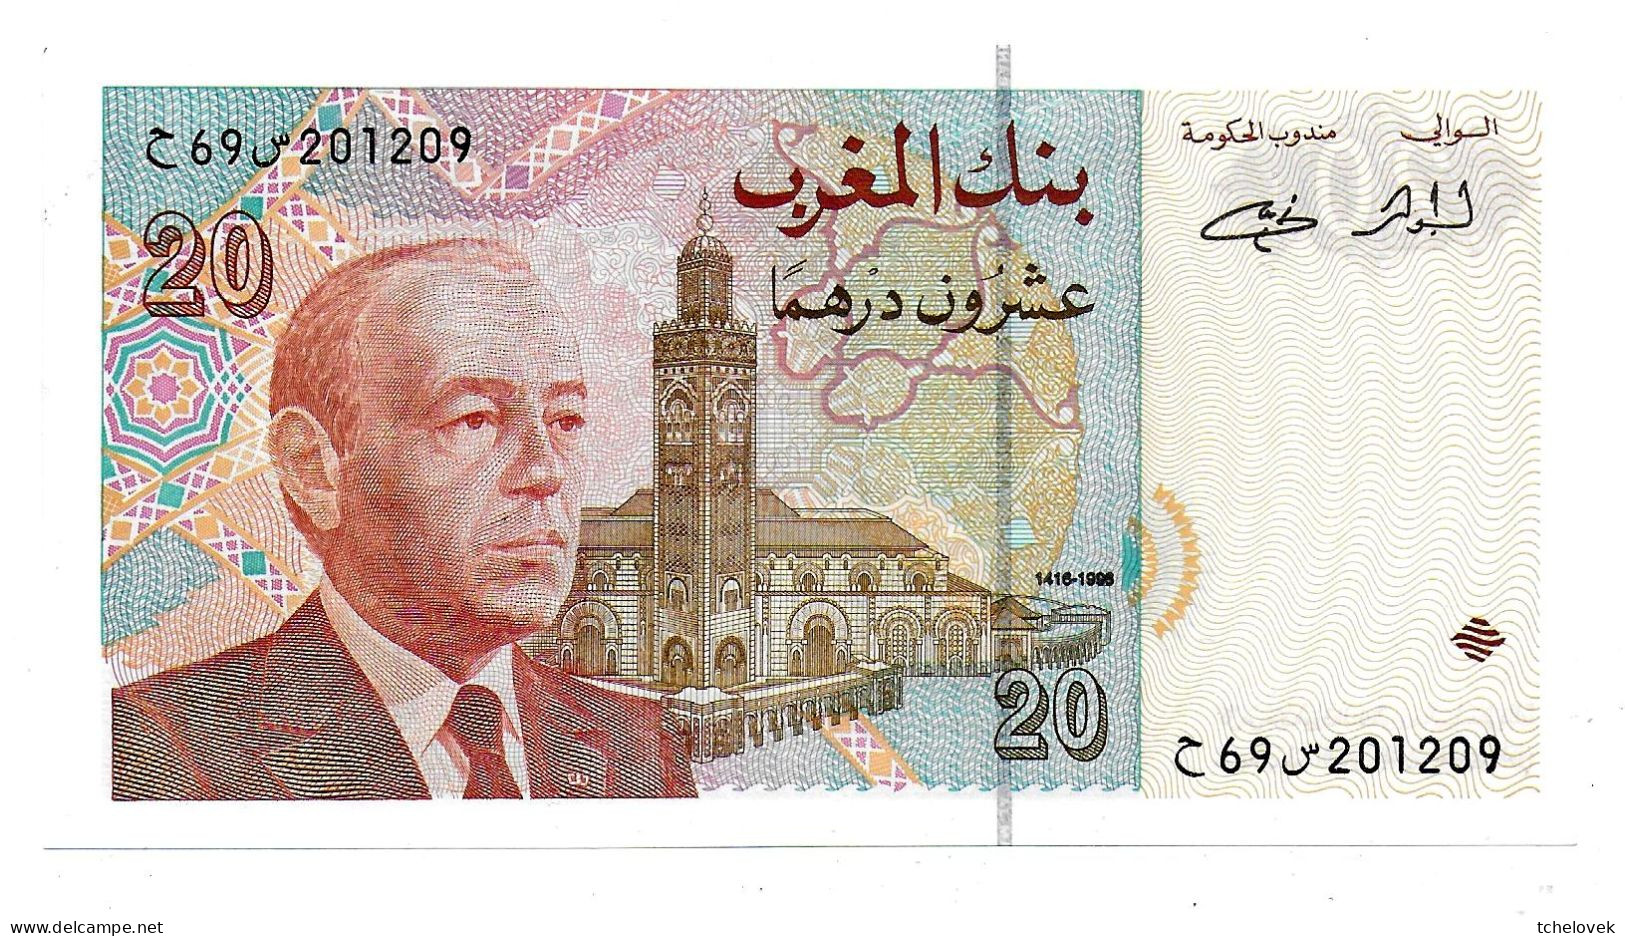 (Billets). Maroc. Morocco. 20 Dirhams 1416 1996 (3). N°69 201209. P 67e. Sign. UNC - Maroc